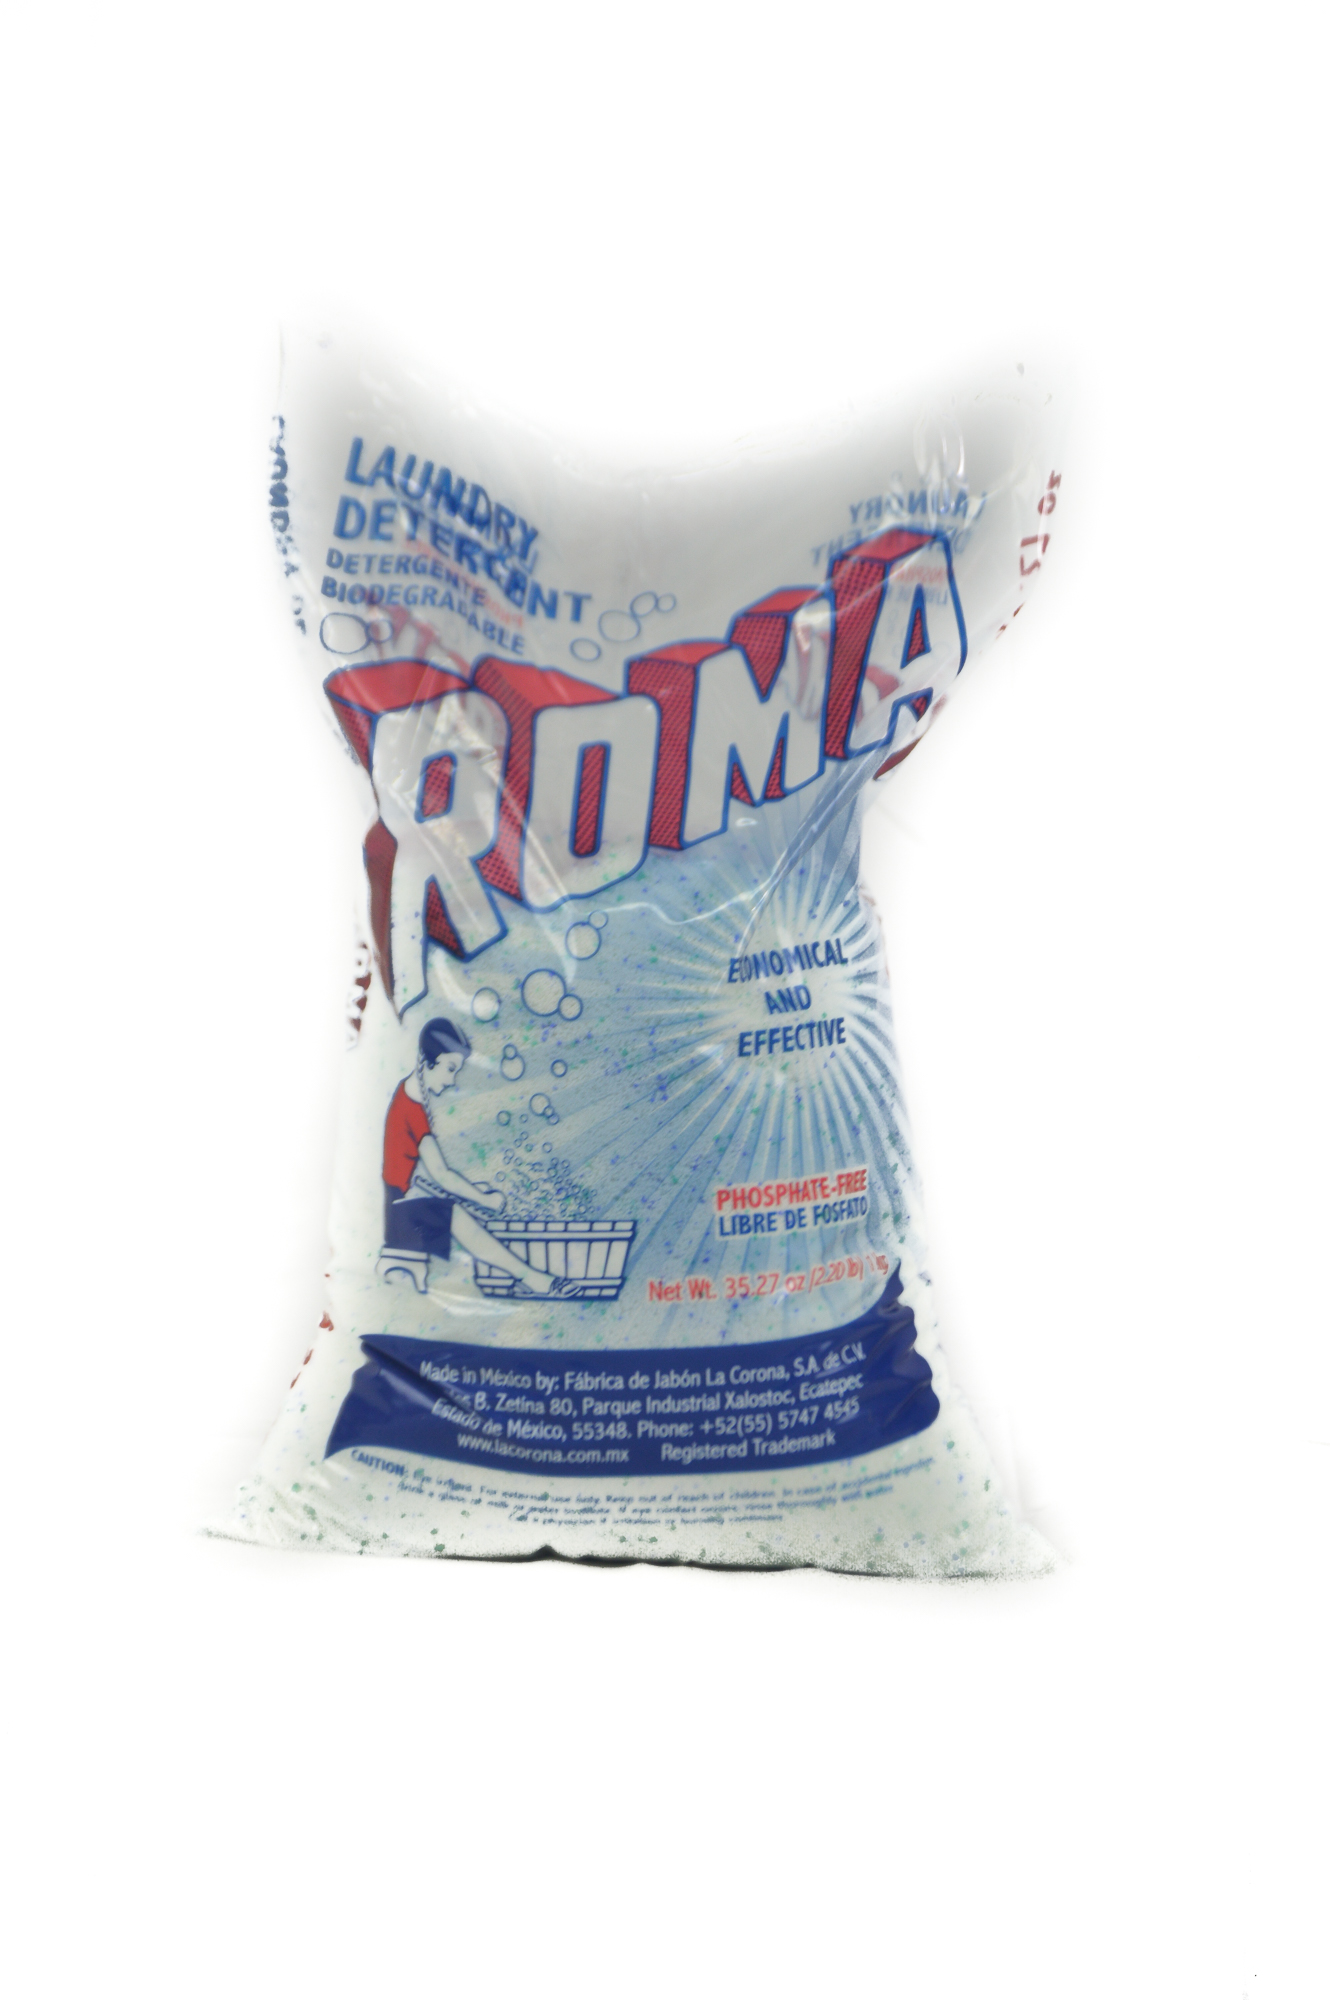 Roma Powder Laundry detergent  35 oz/i LB